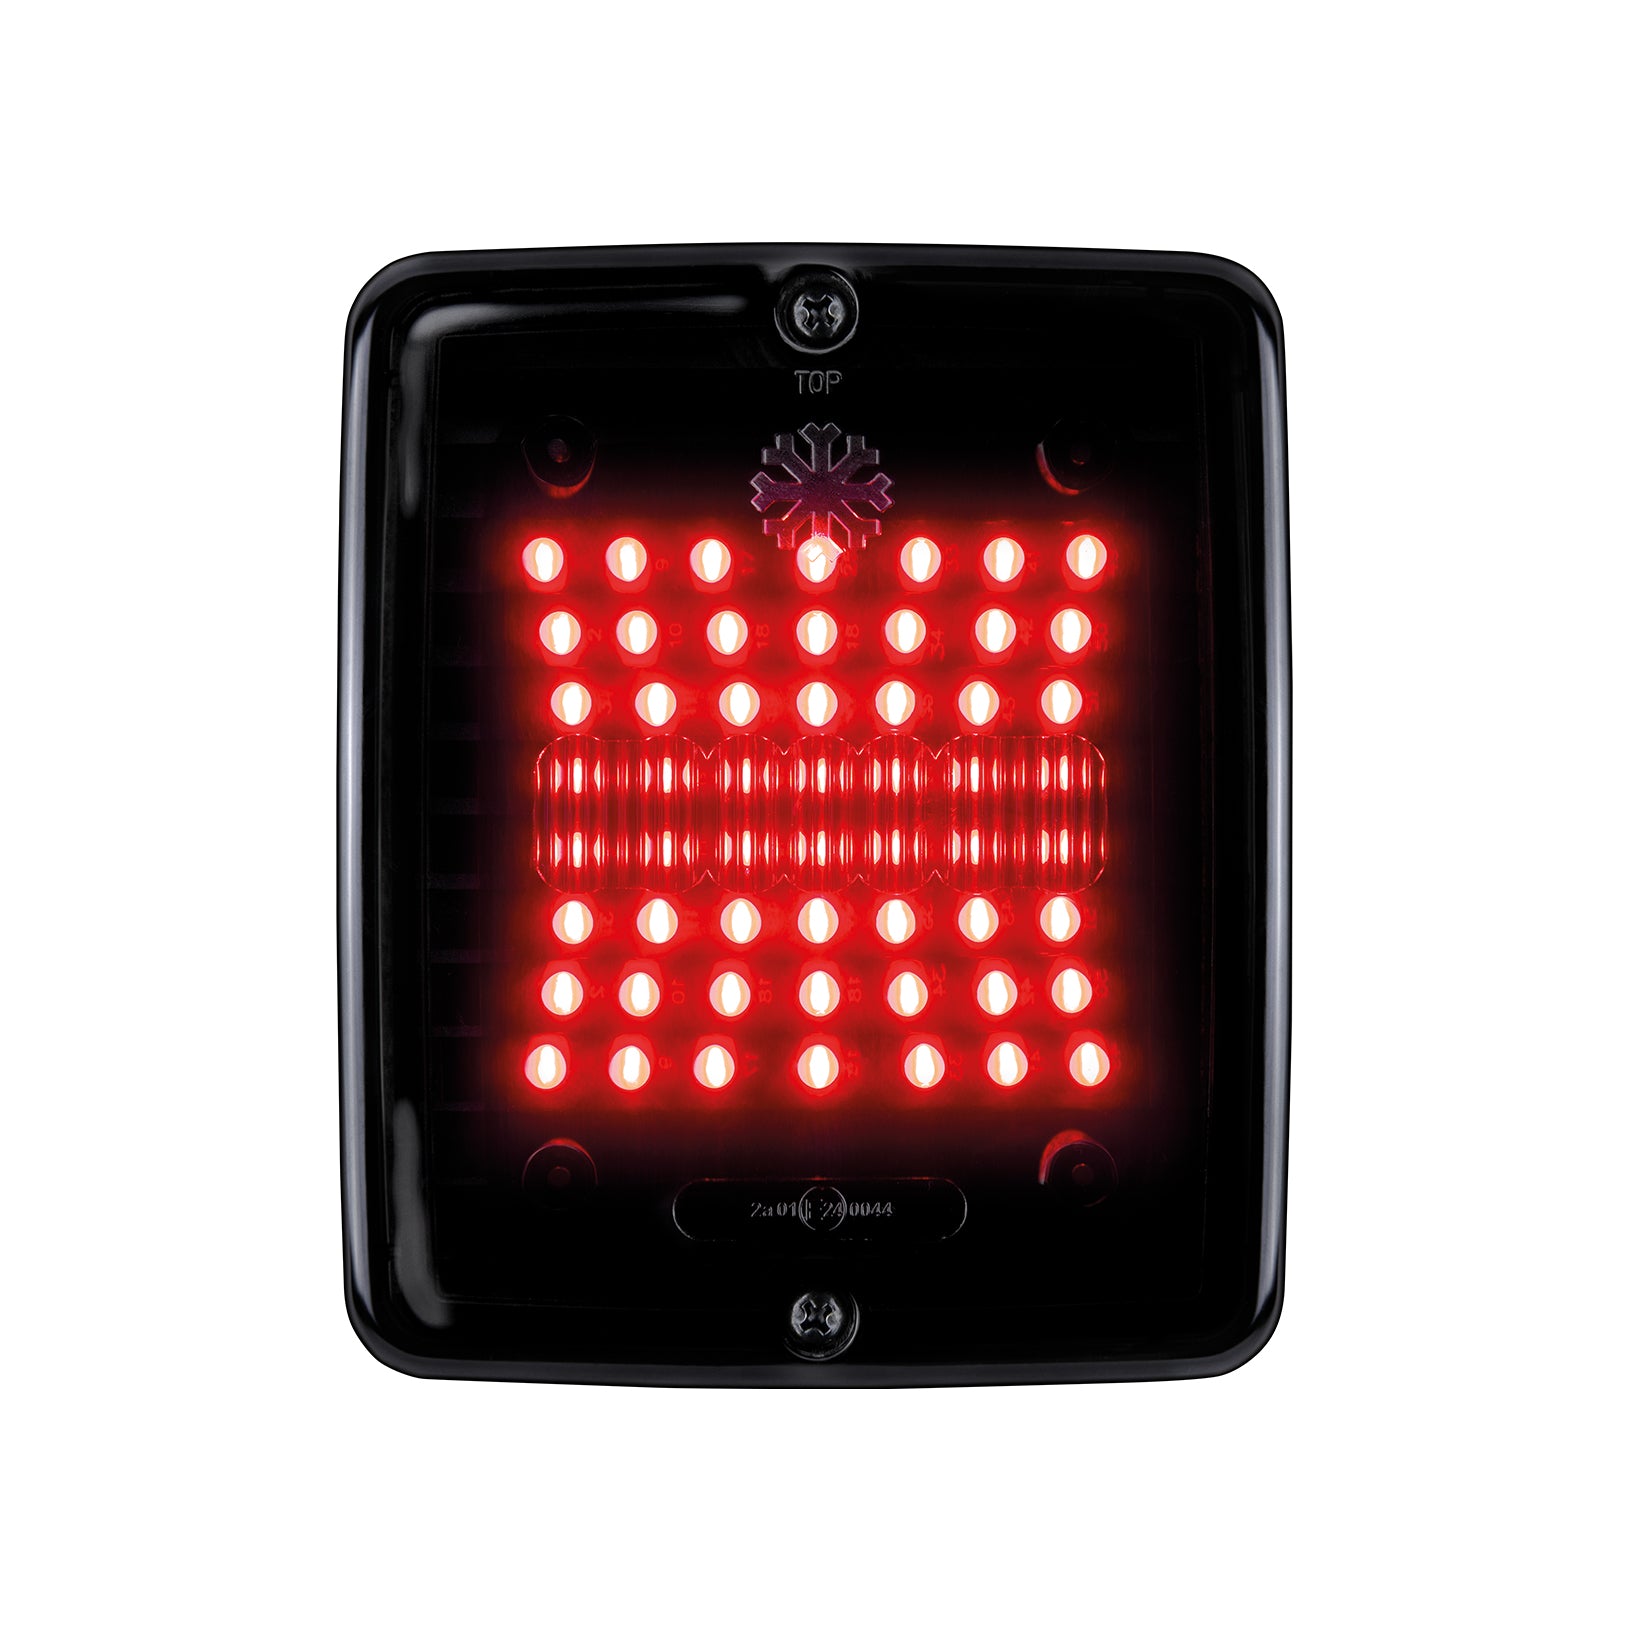 Strands Dark Knight Square IZE LED-Rücklichter – spo-cs-disabled – spo-default – spo-enabled – spo-notify-me-disabled